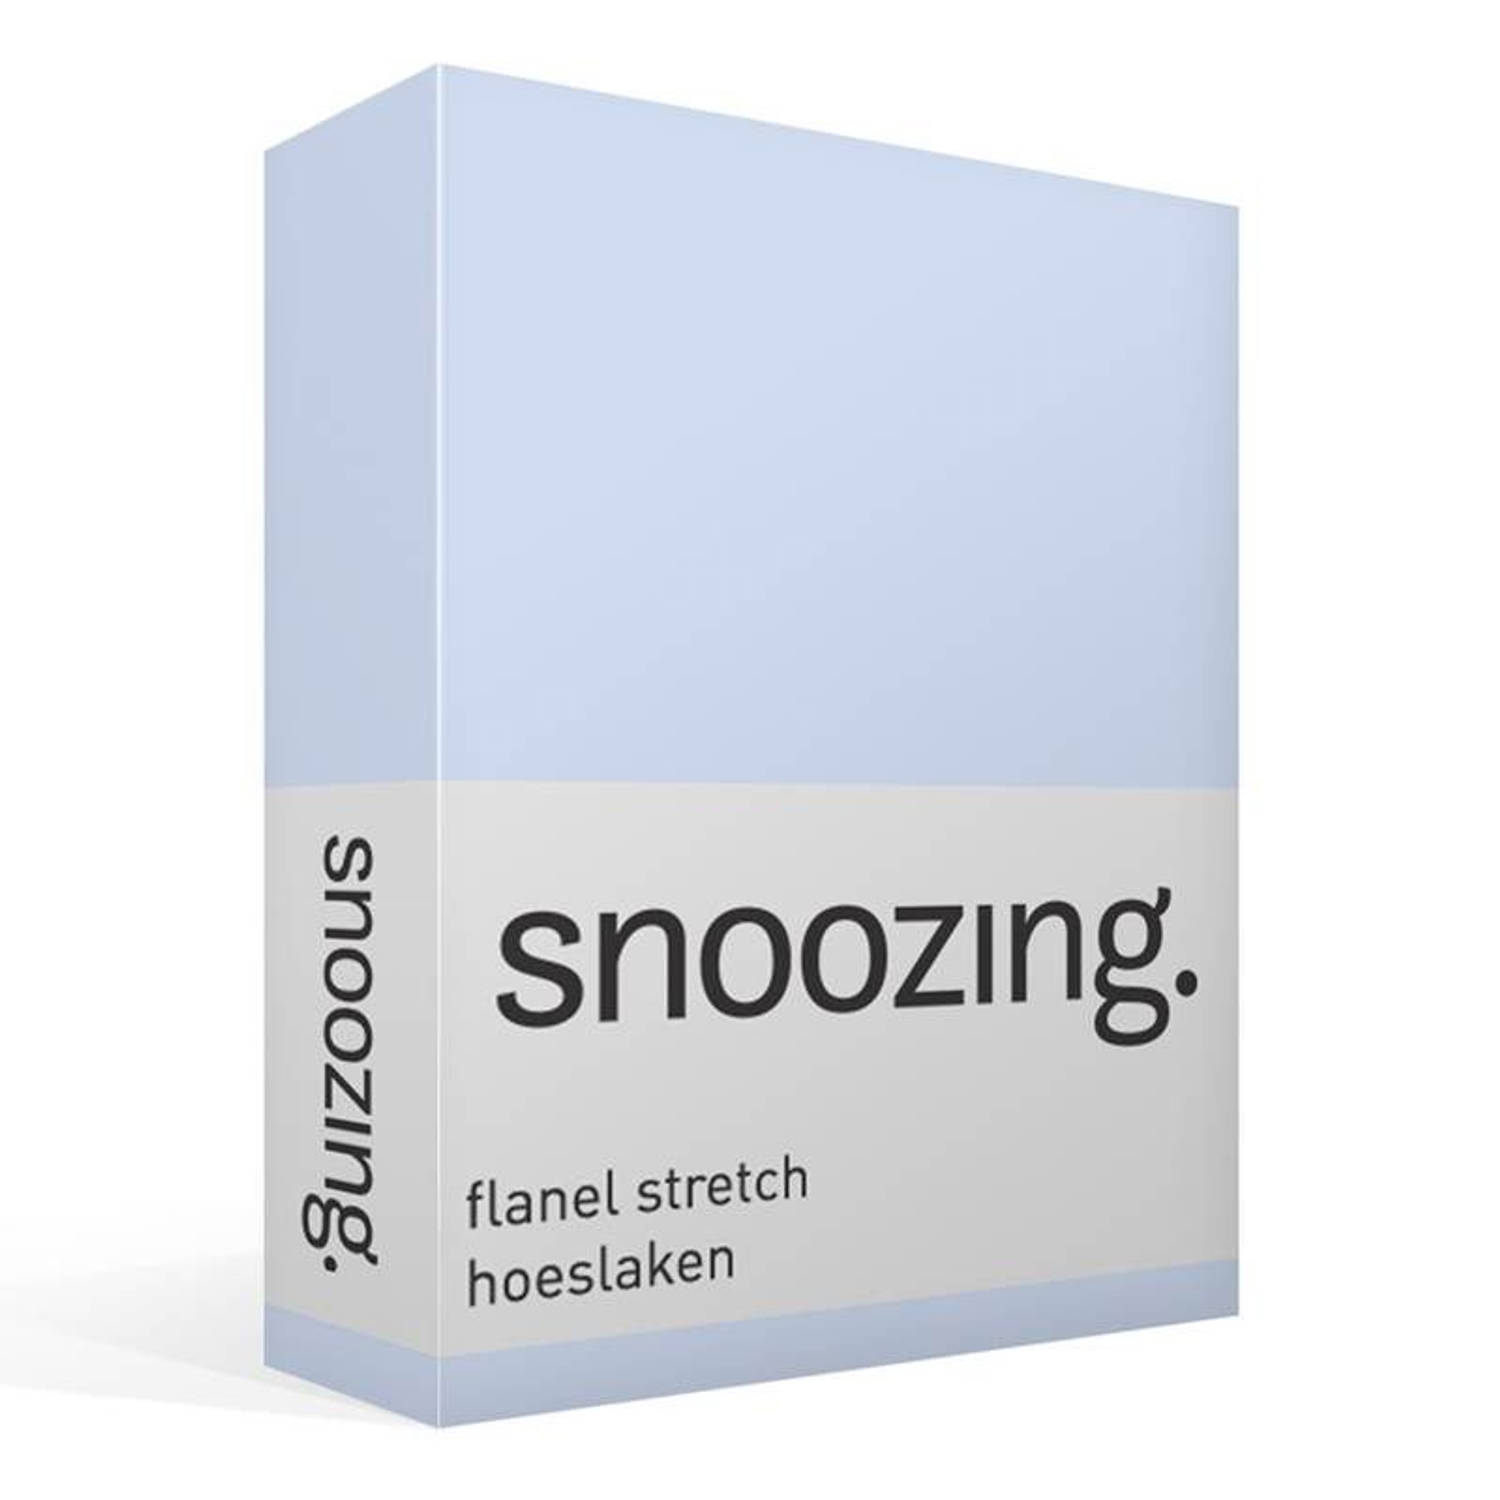 Snoozing stretch flanel hoeslaken - Tweepersoons - Hemel